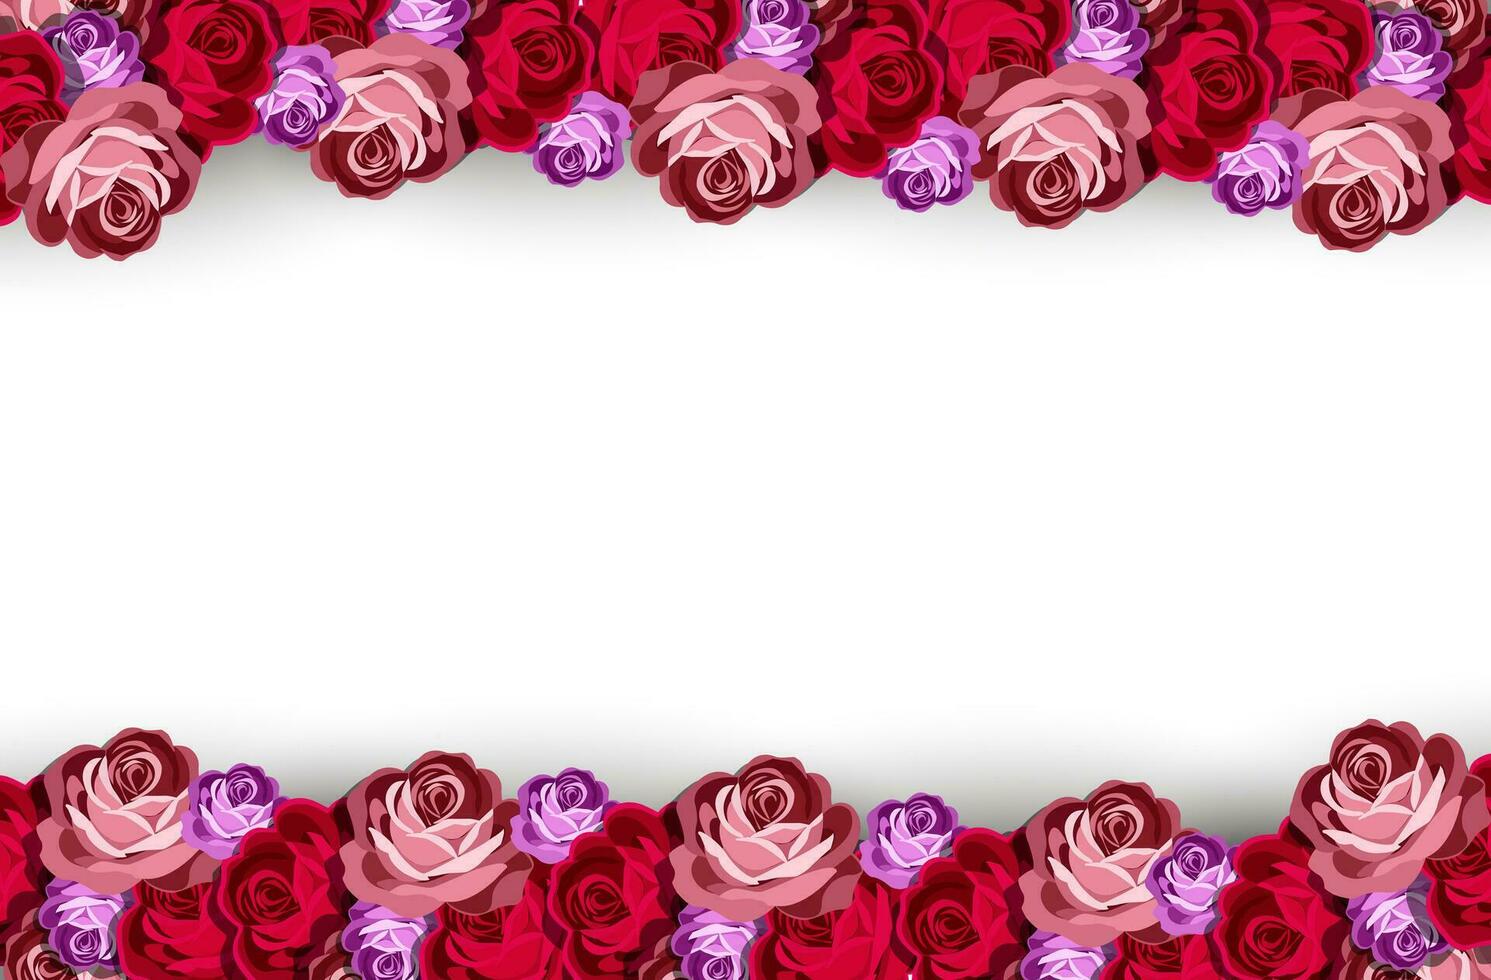 Rose background, Valentine's Day romantic concept. vector